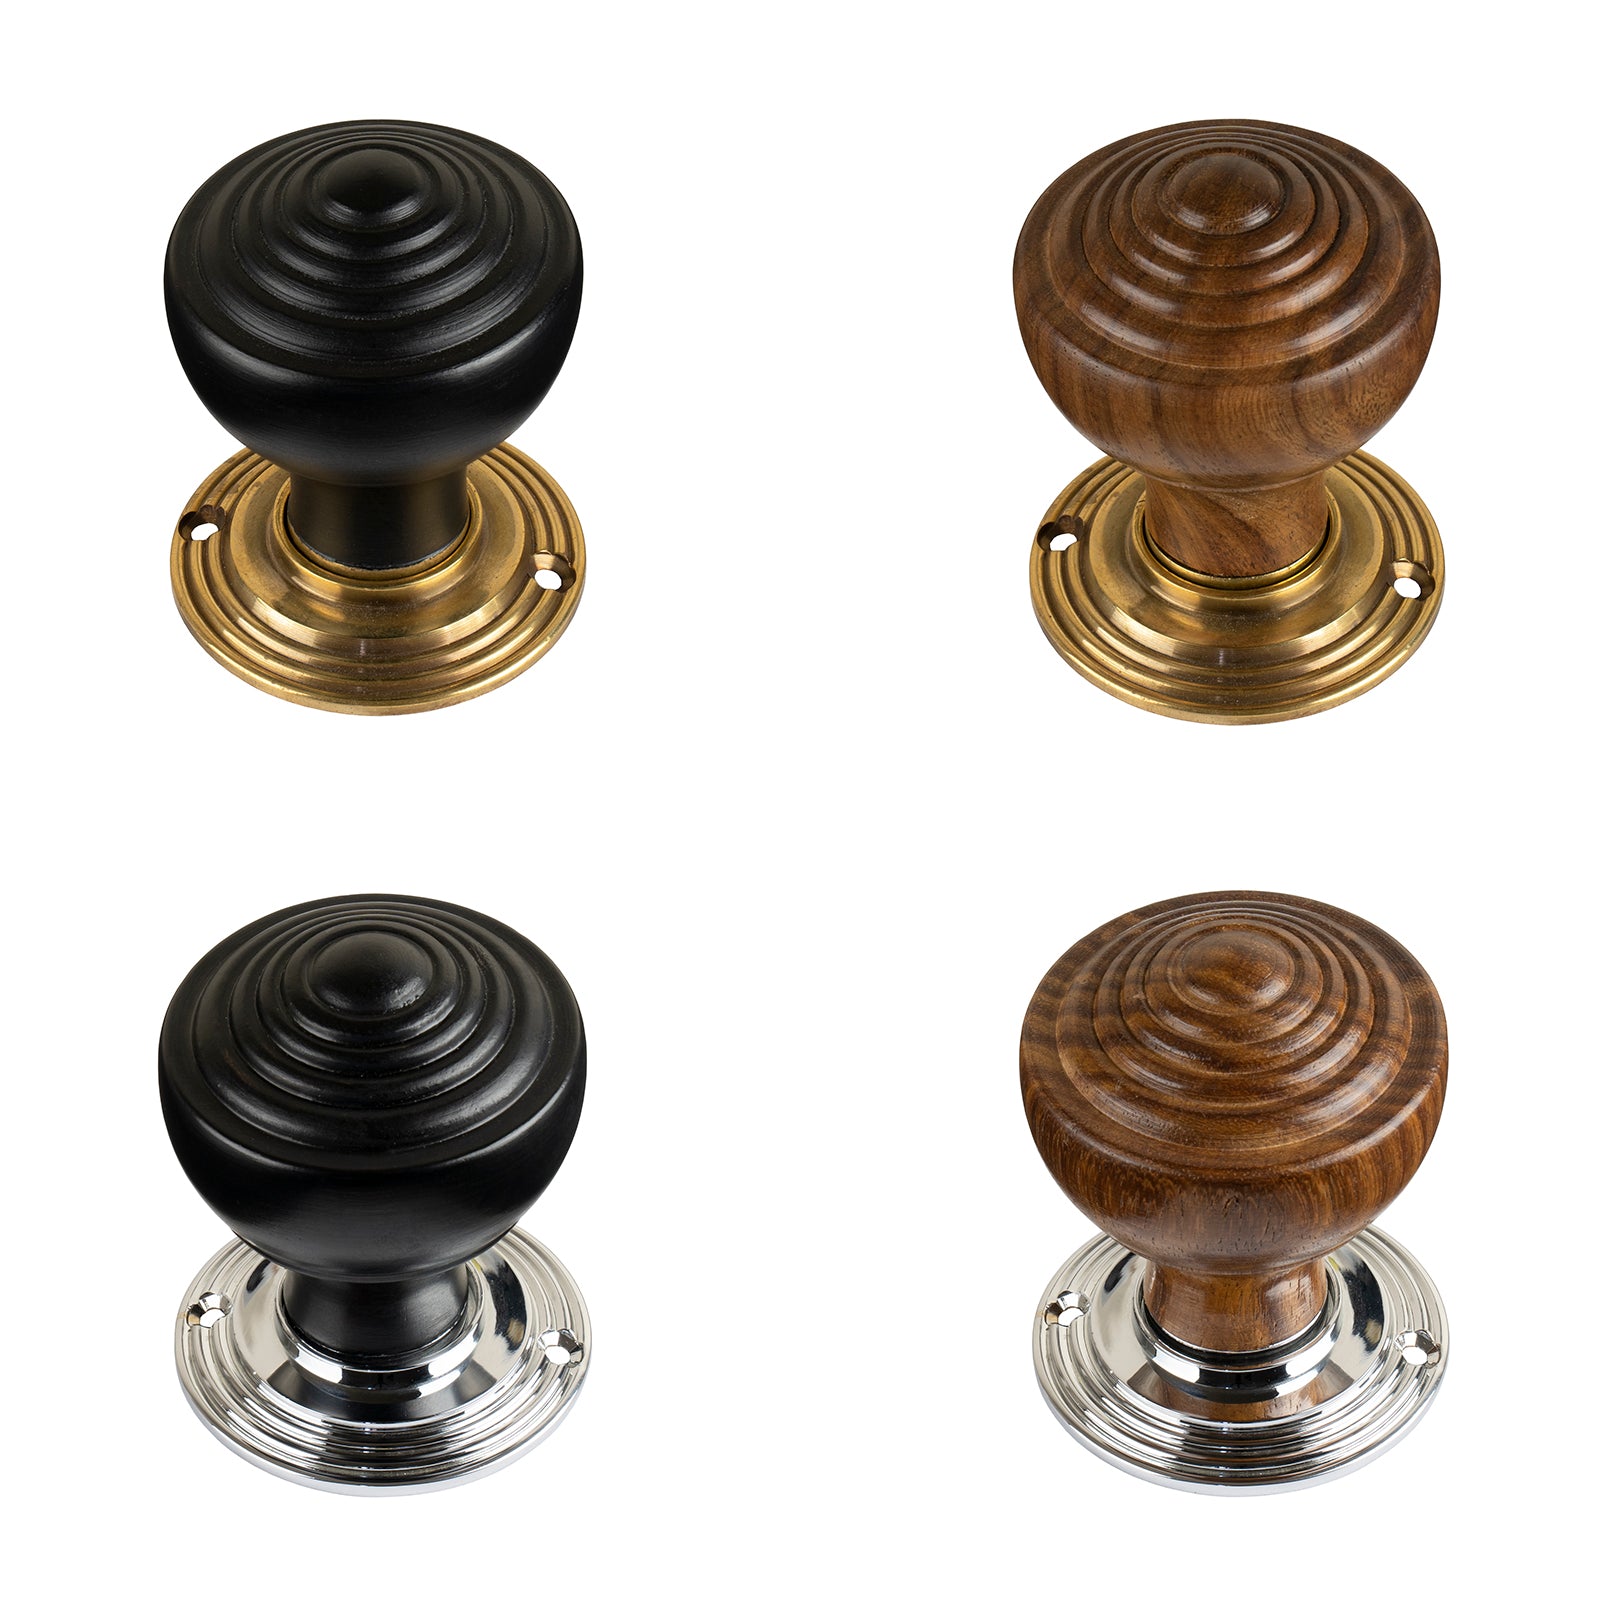 period door knobs - ringed door knobs rosewood & ebonised